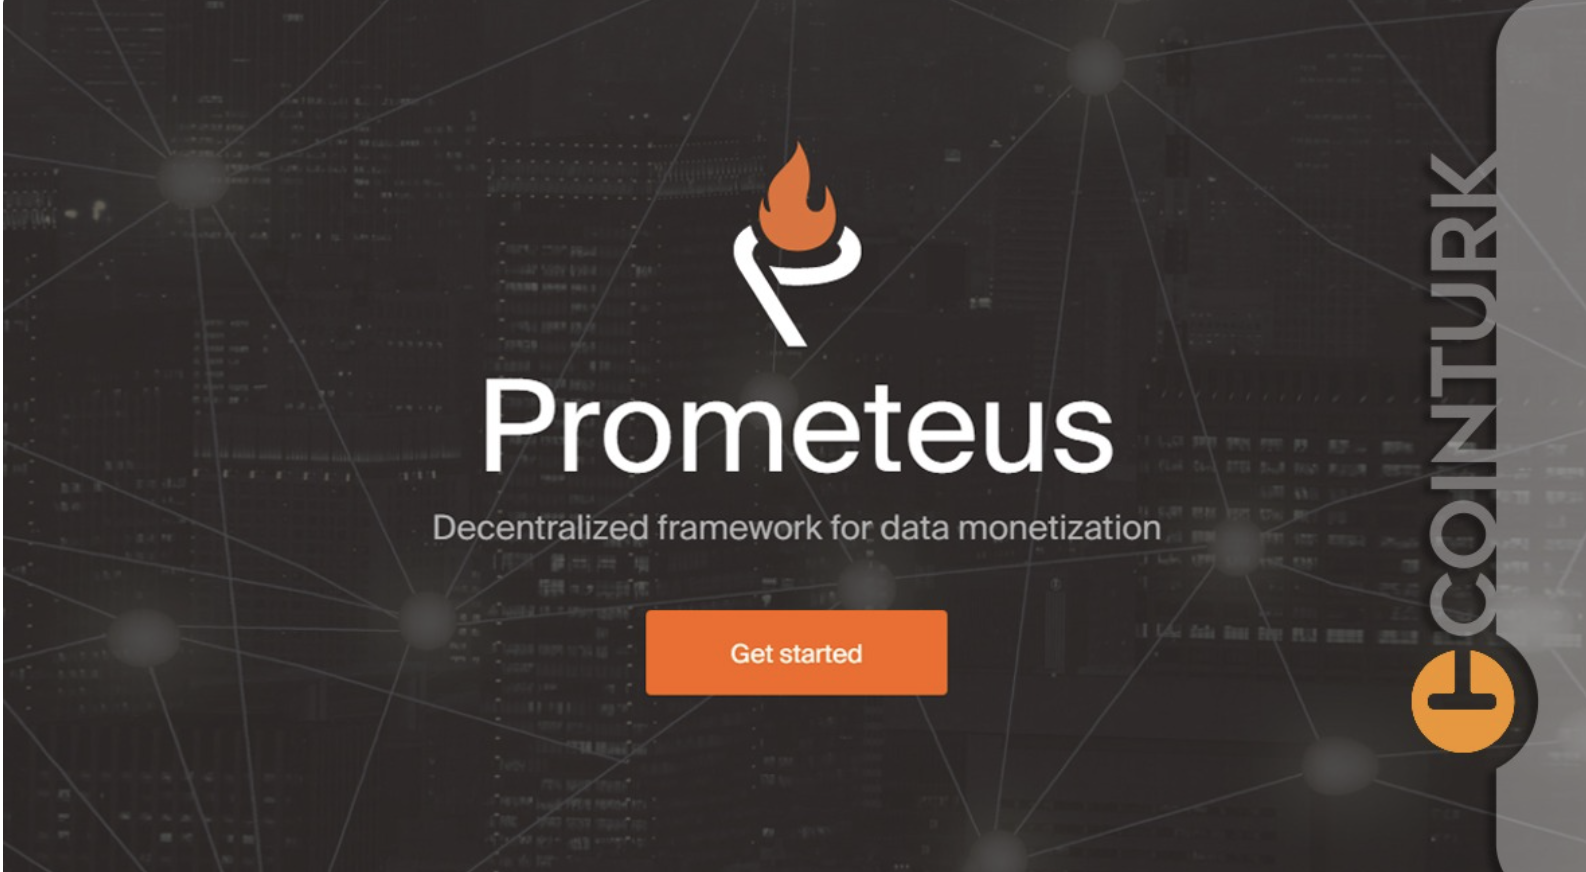 How to Buy Prometeus Coin?